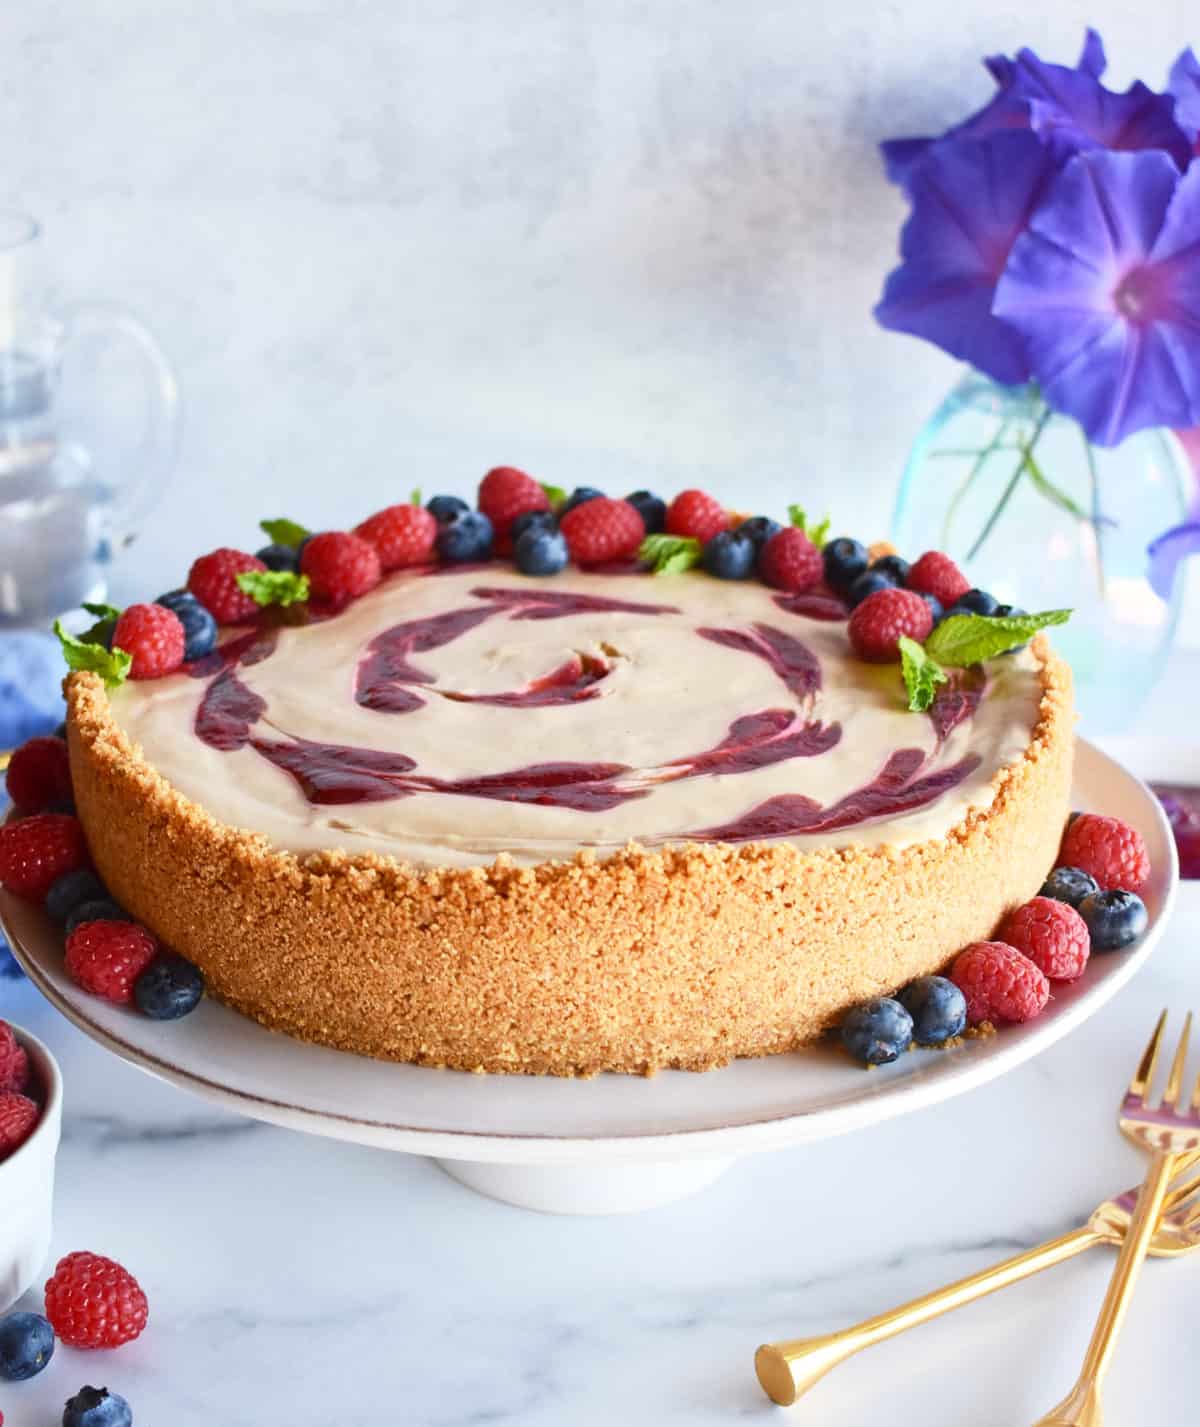 The finished no bake raspberry mascarpone cheesecake with a raspberry swirl and fresh fruit garnish.